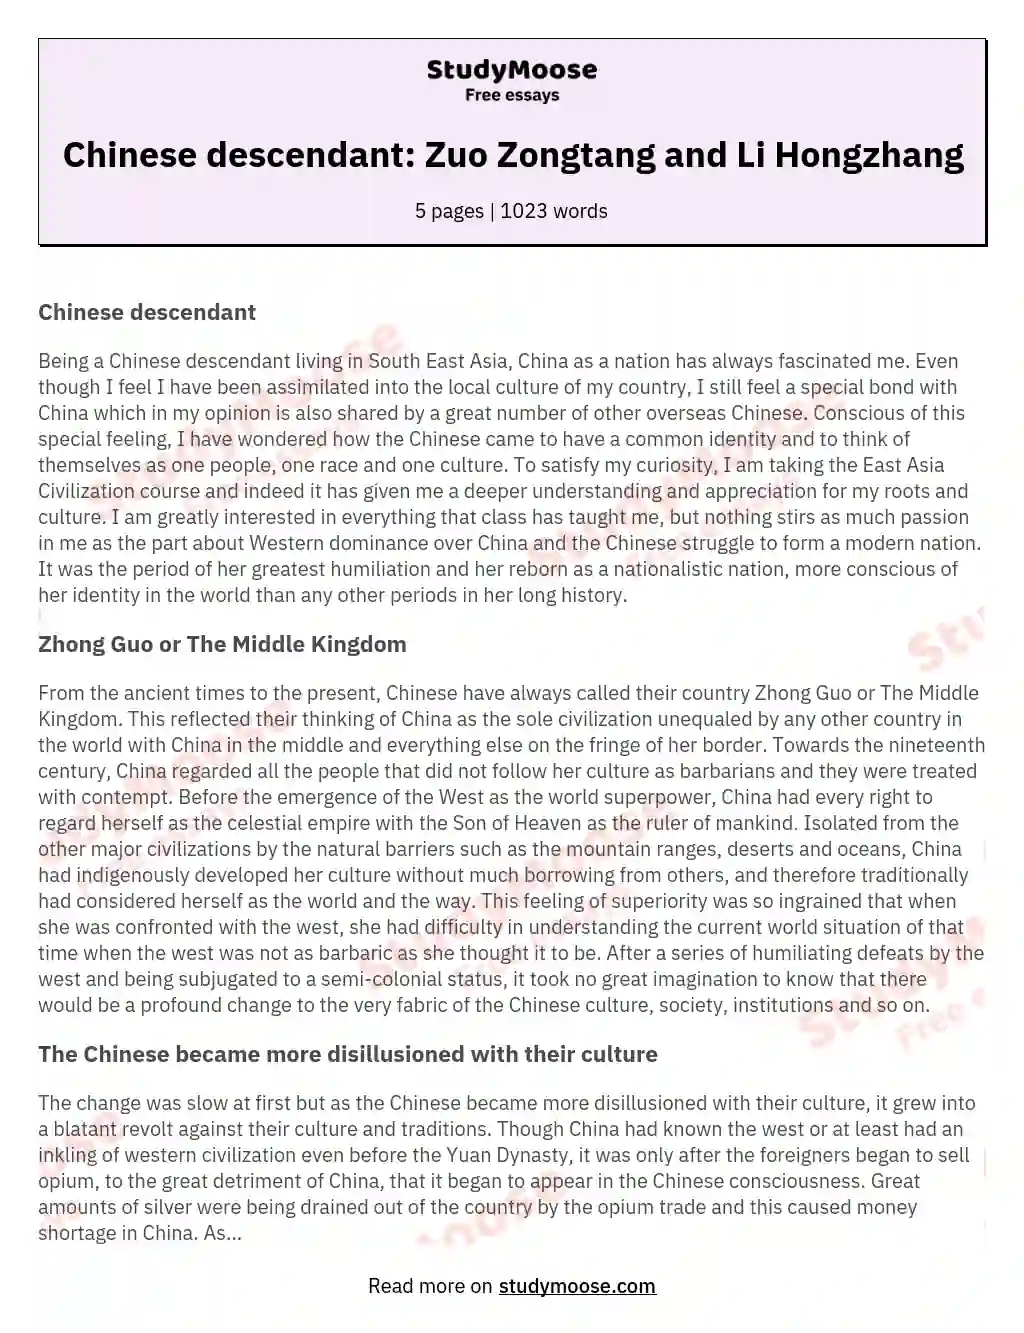 Chinese descendant: Zuo Zongtang and Li Hongzhang essay